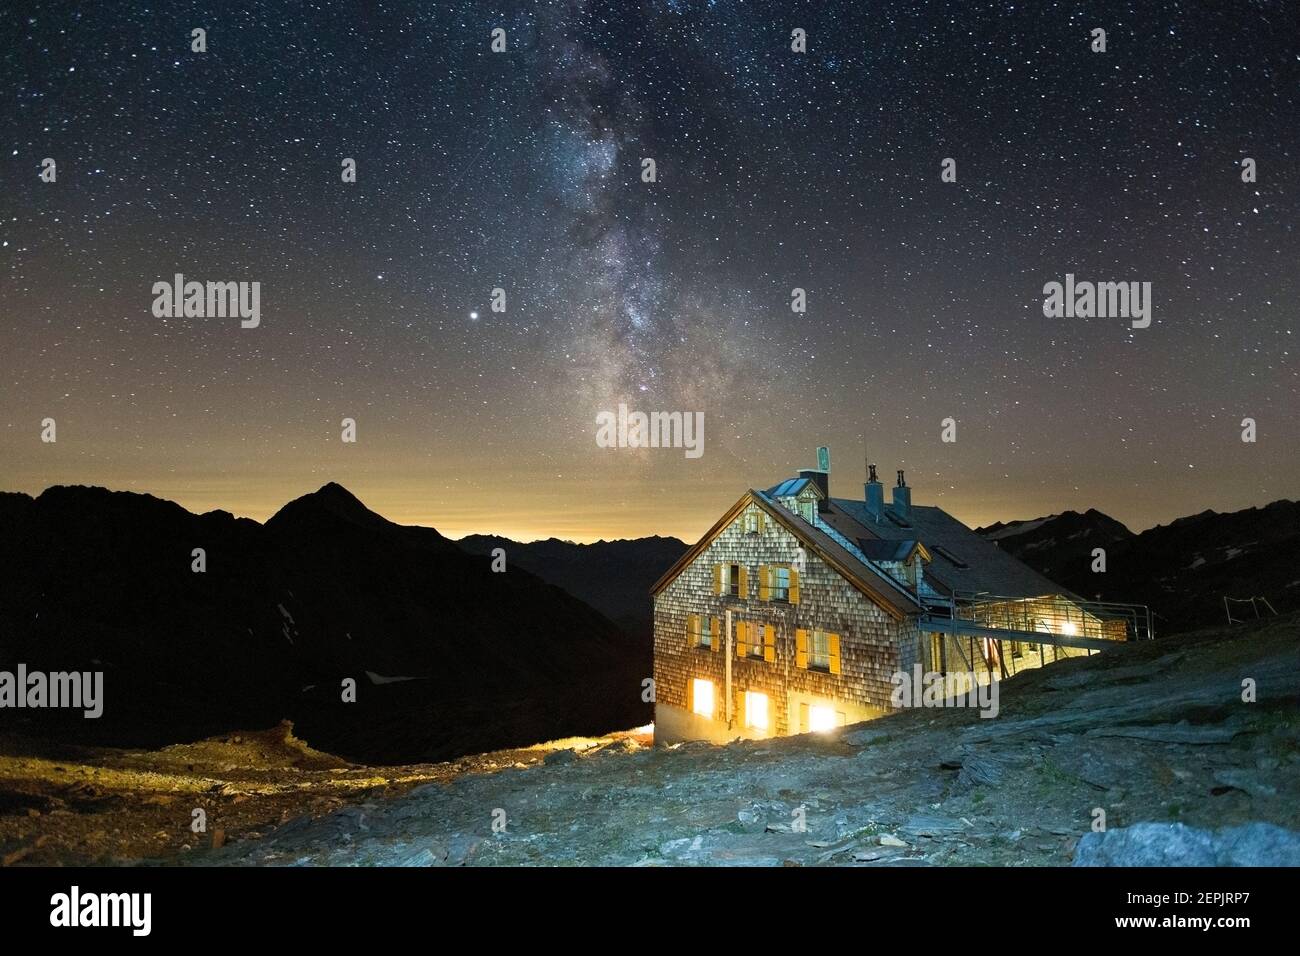 Defreggerhaus alpine refuge. Night landscape, milky way. Venediger mountain group. Austrian Alps. Europe. Stock Photo